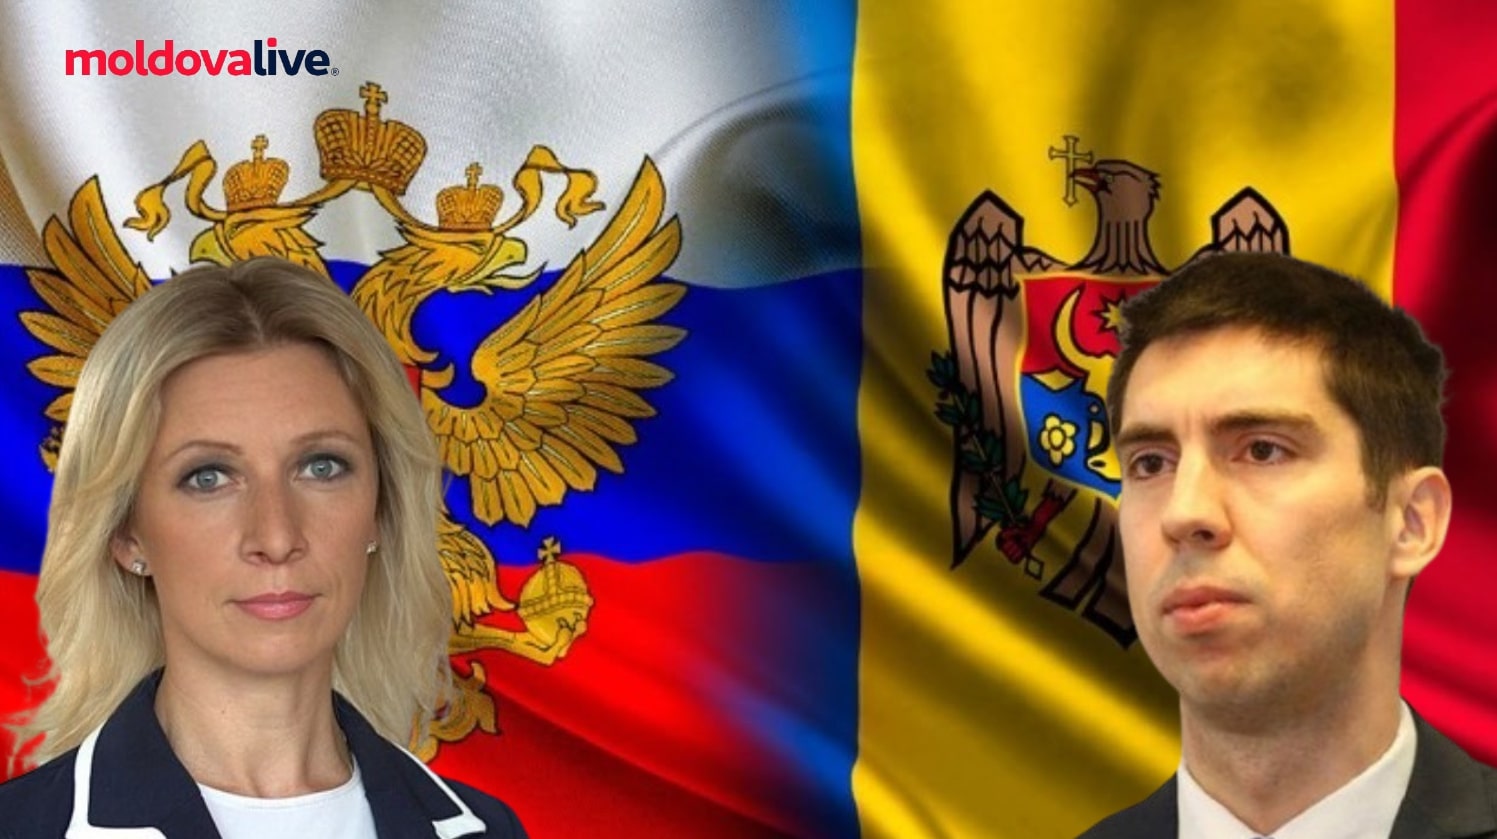 “Hallucinatory delirium:” Moldovan Foreign Ministry reacts to Zakharova’s attacks against Moldovan authorities